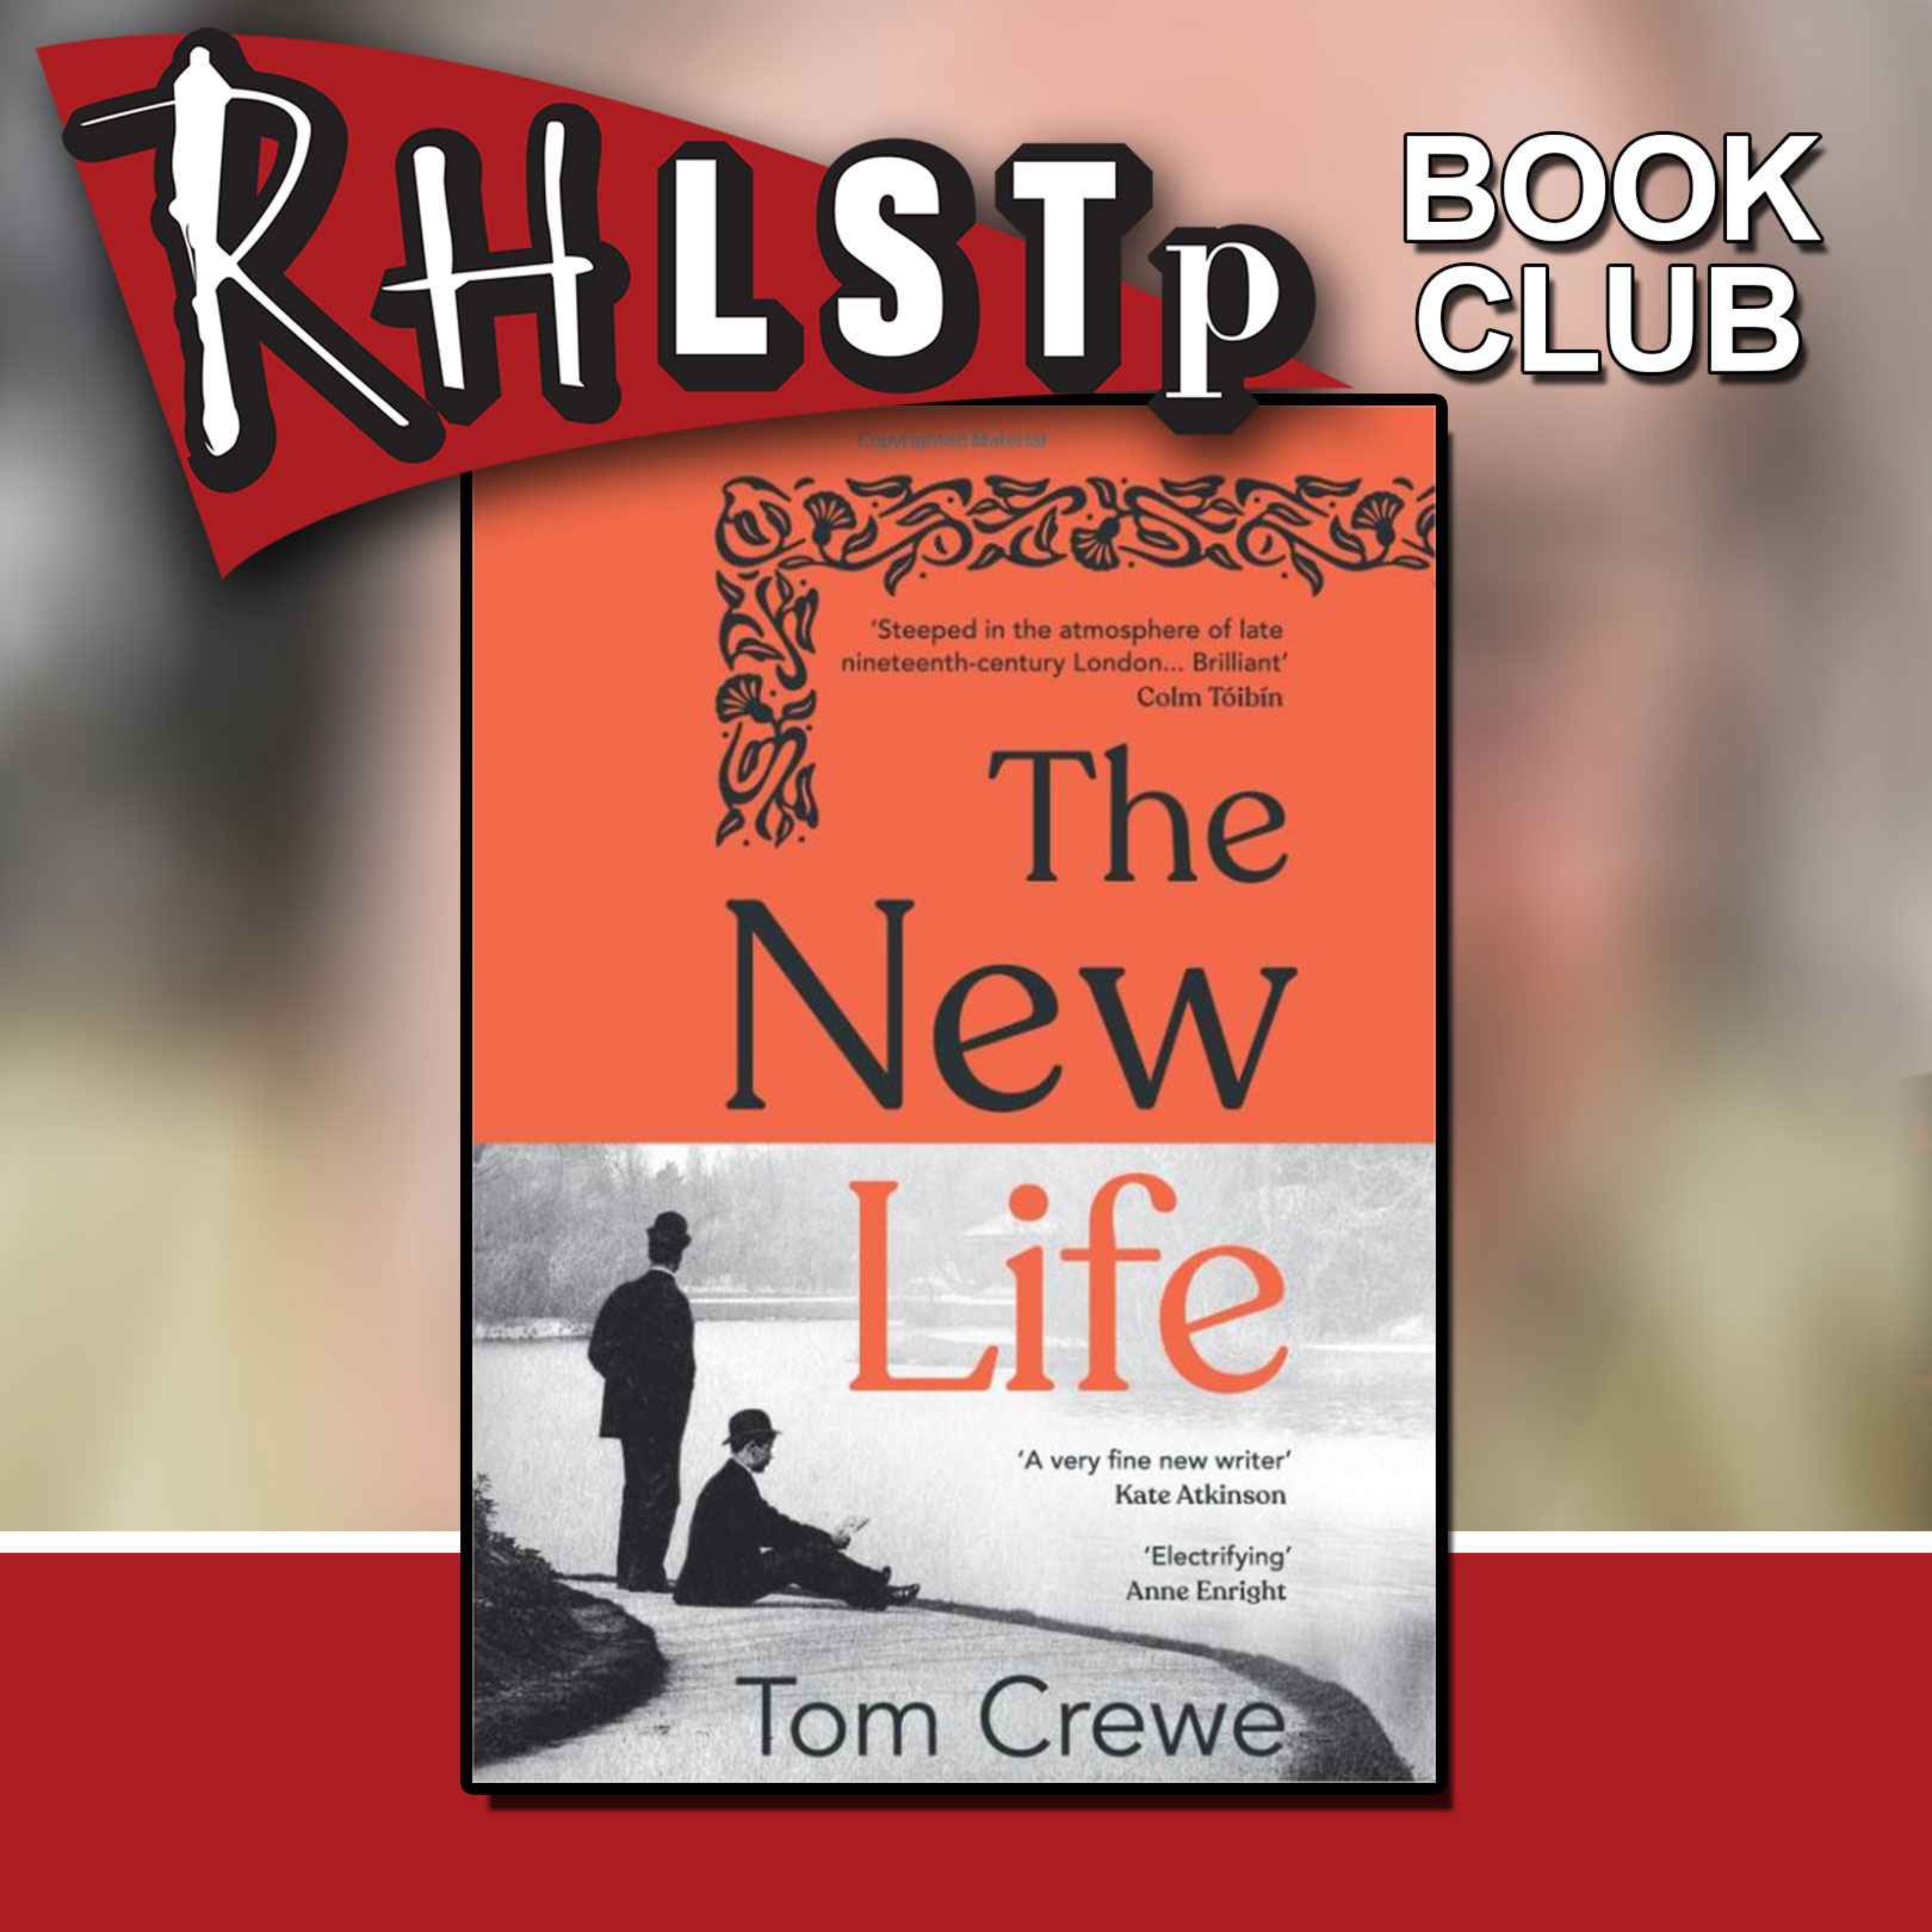 RHLSTP Book Club 42 - Tom Crewe